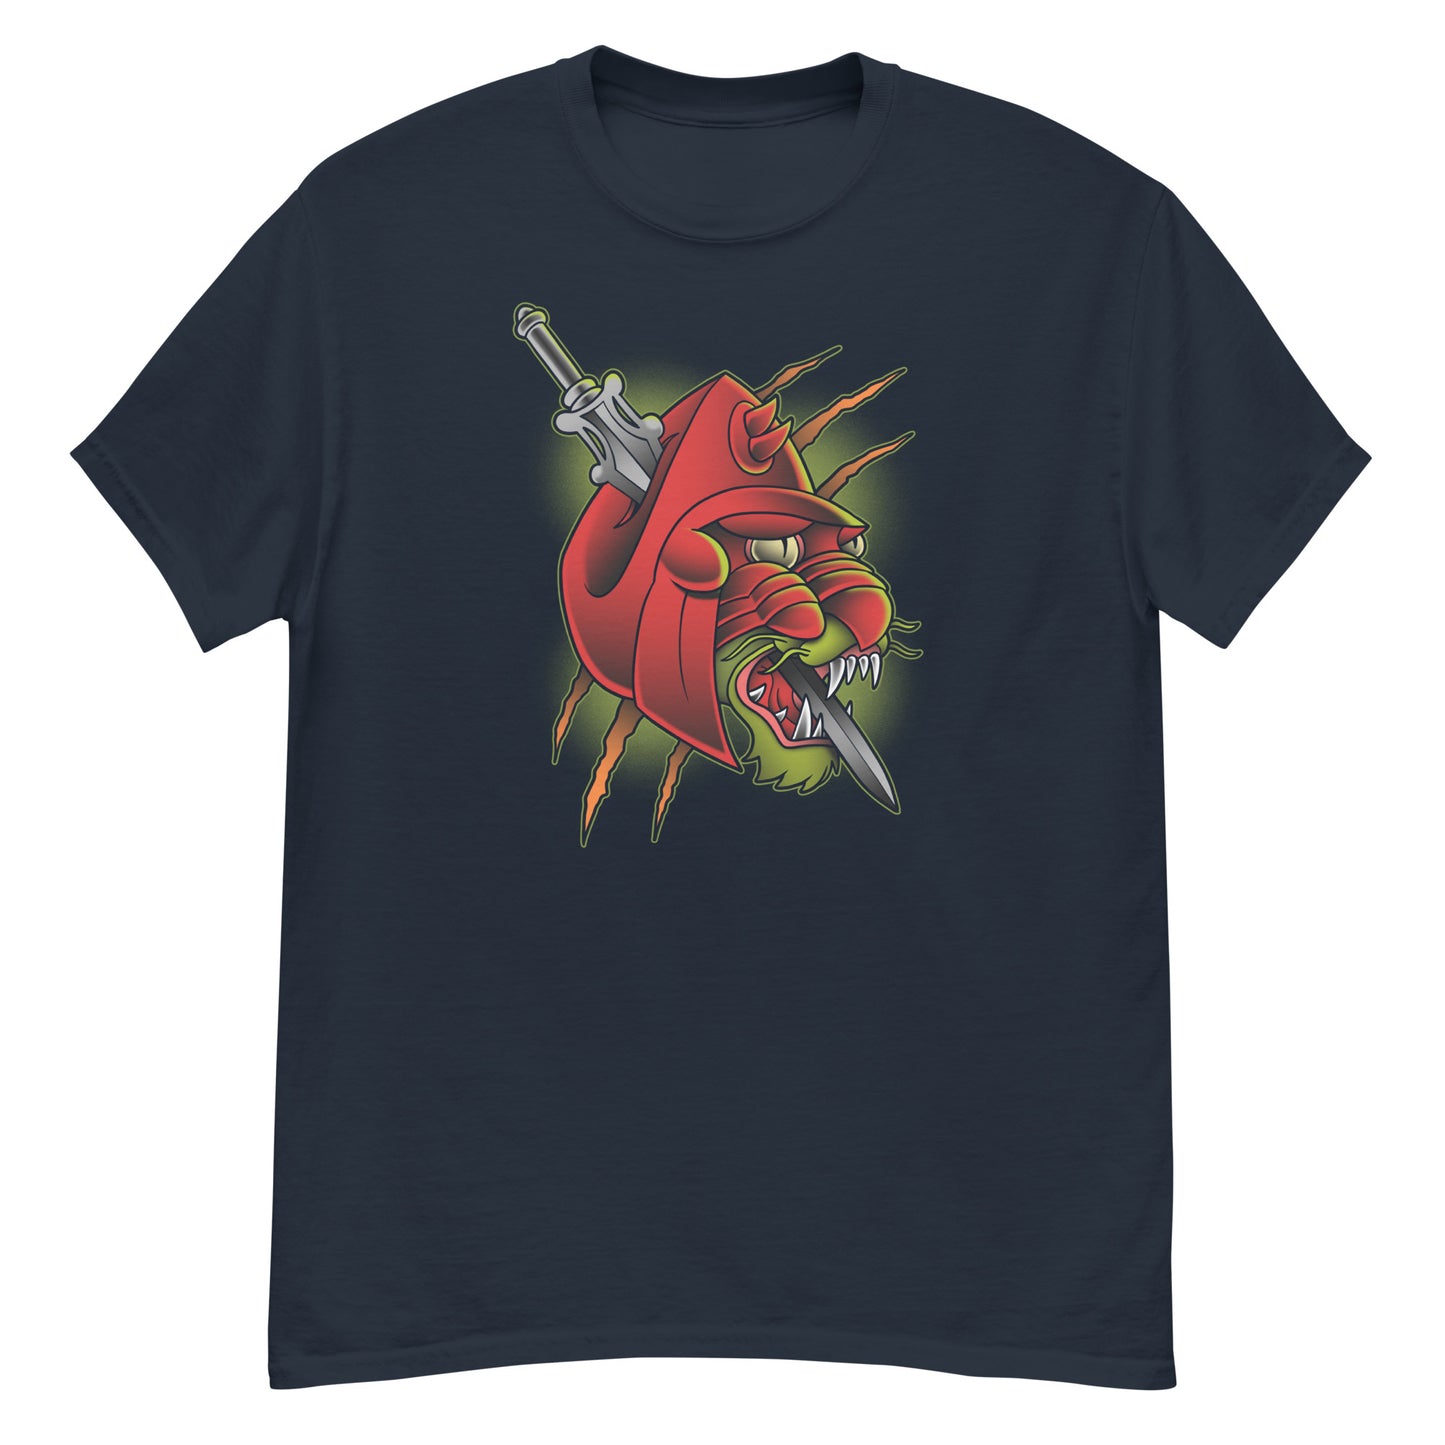 Battle Tat t-shirt